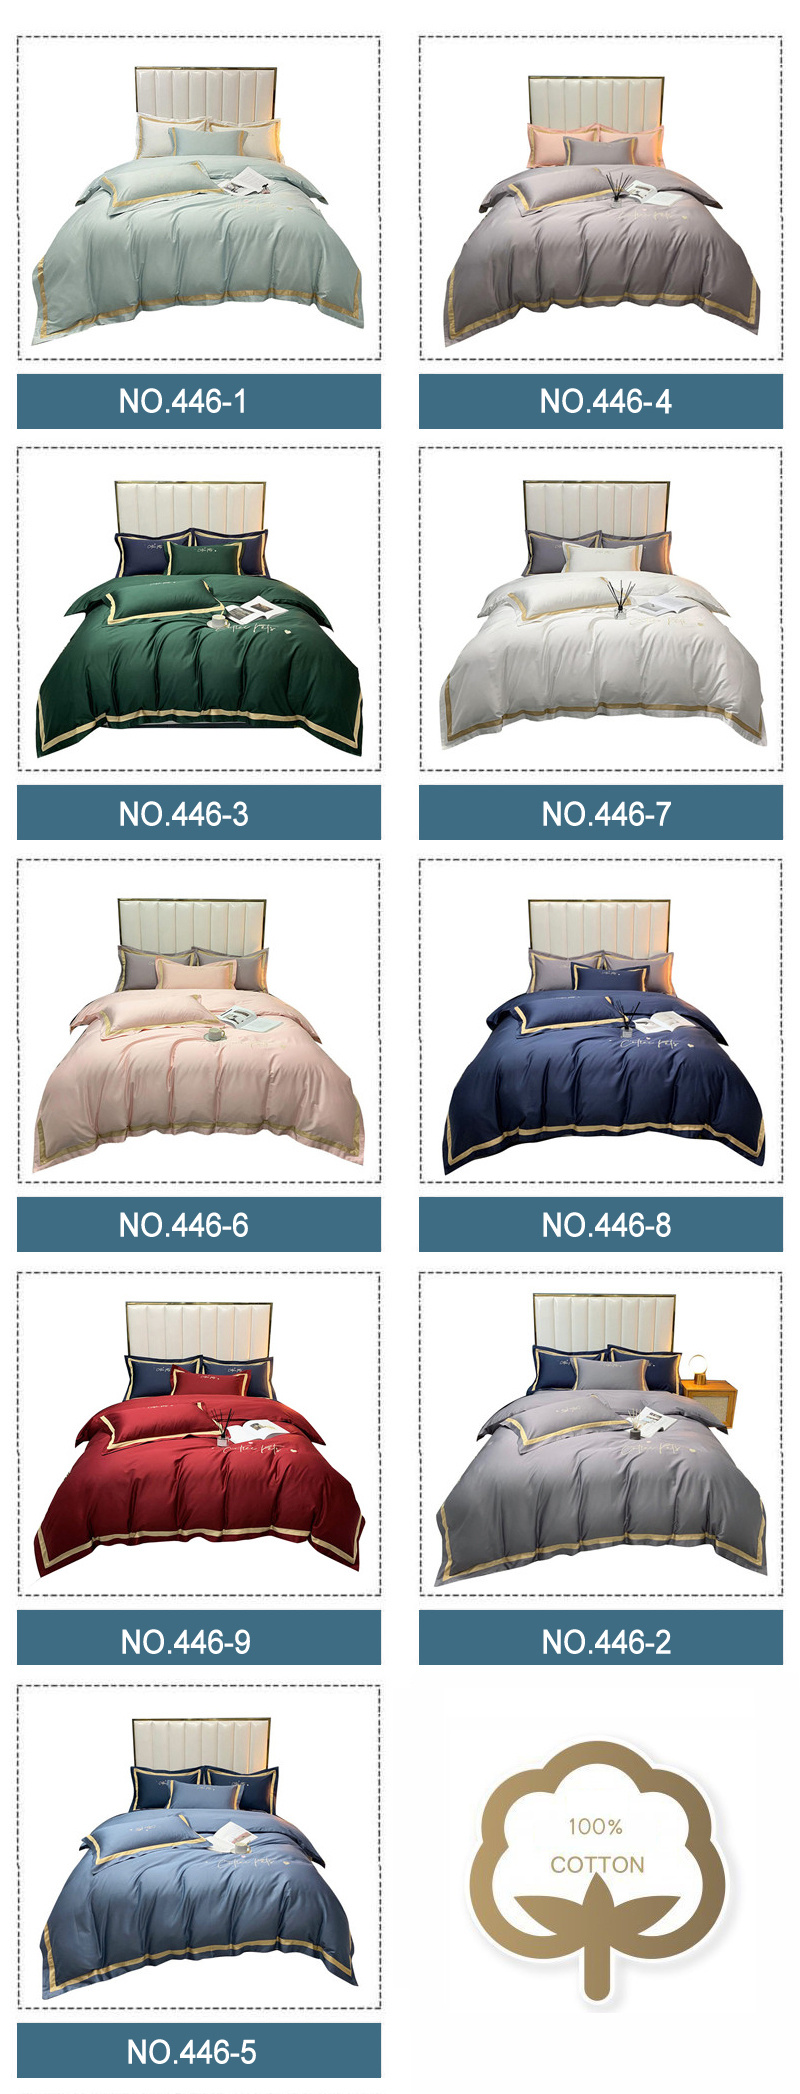 Luxury Home Textile Deluxe Sleep 100% Cotton Bedsheet Red 4PCS